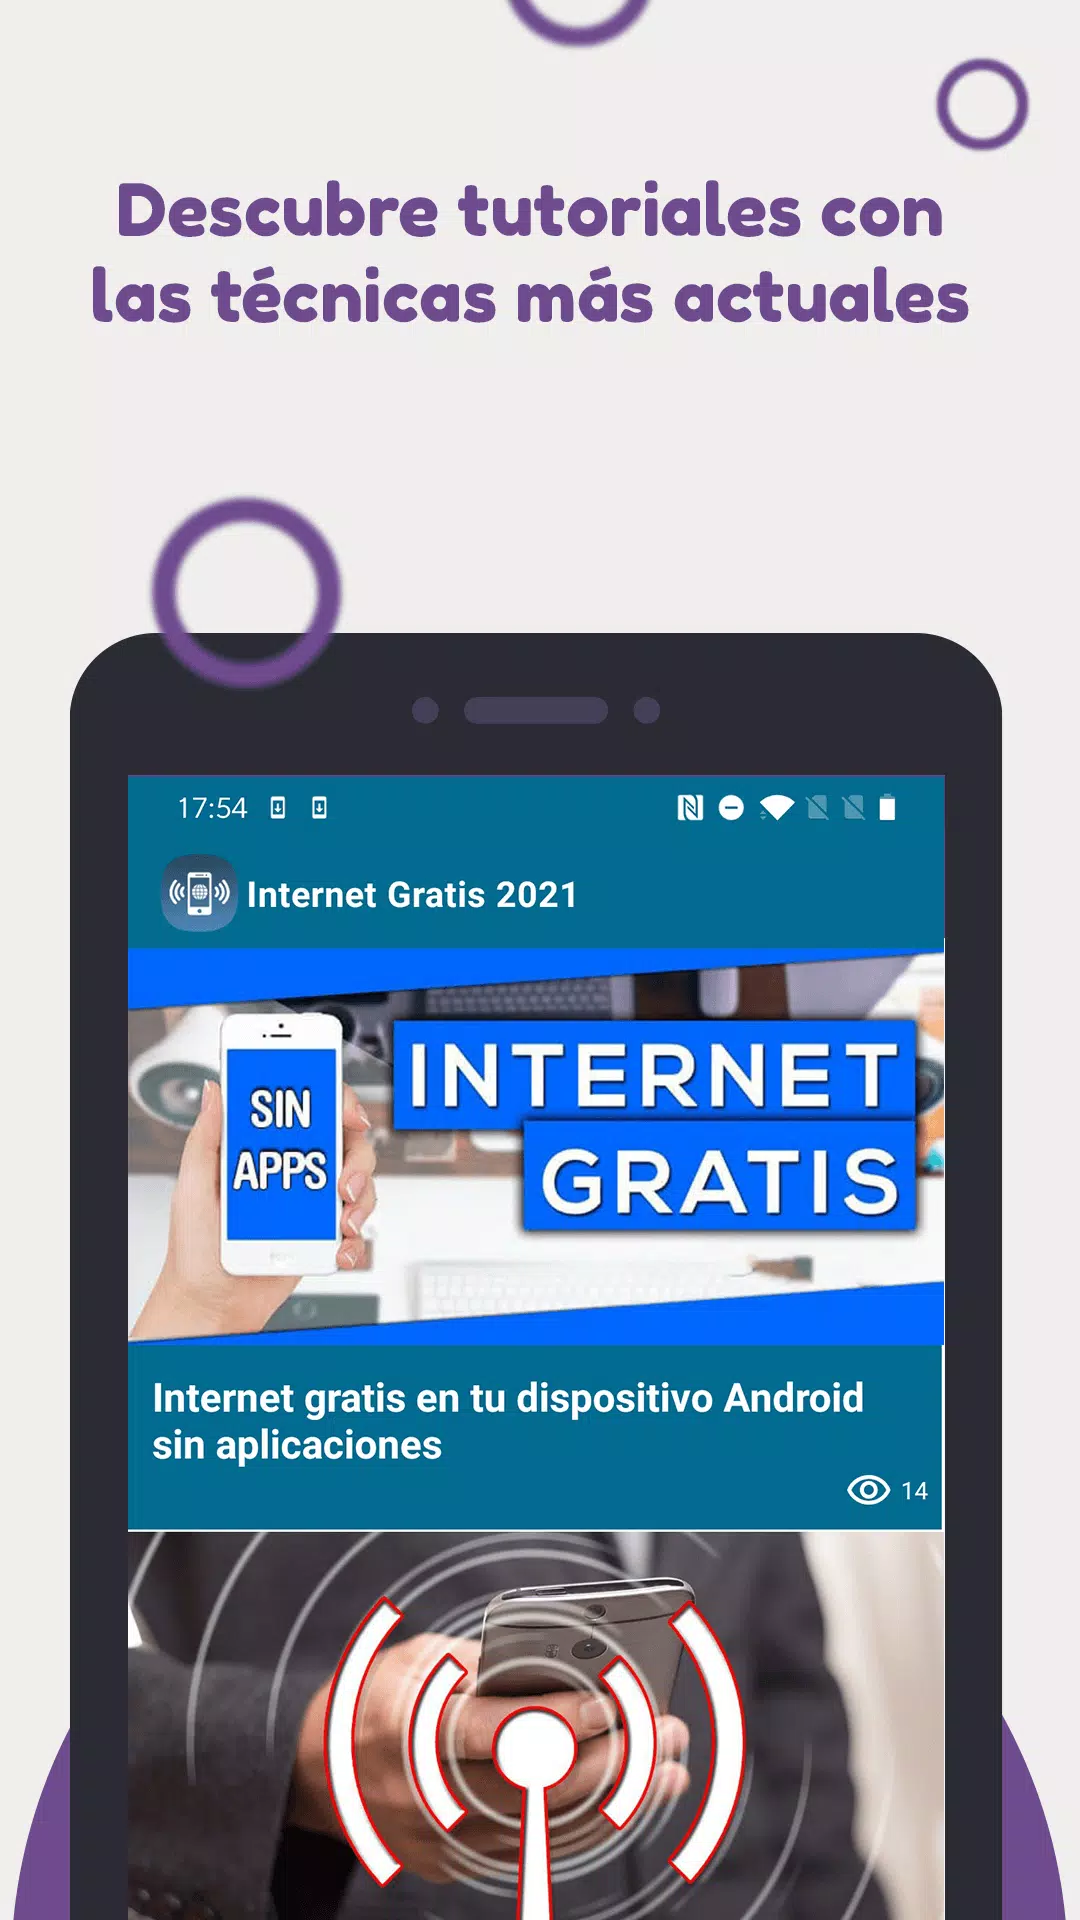 Download do APK de internet gratis android 2019 para Android